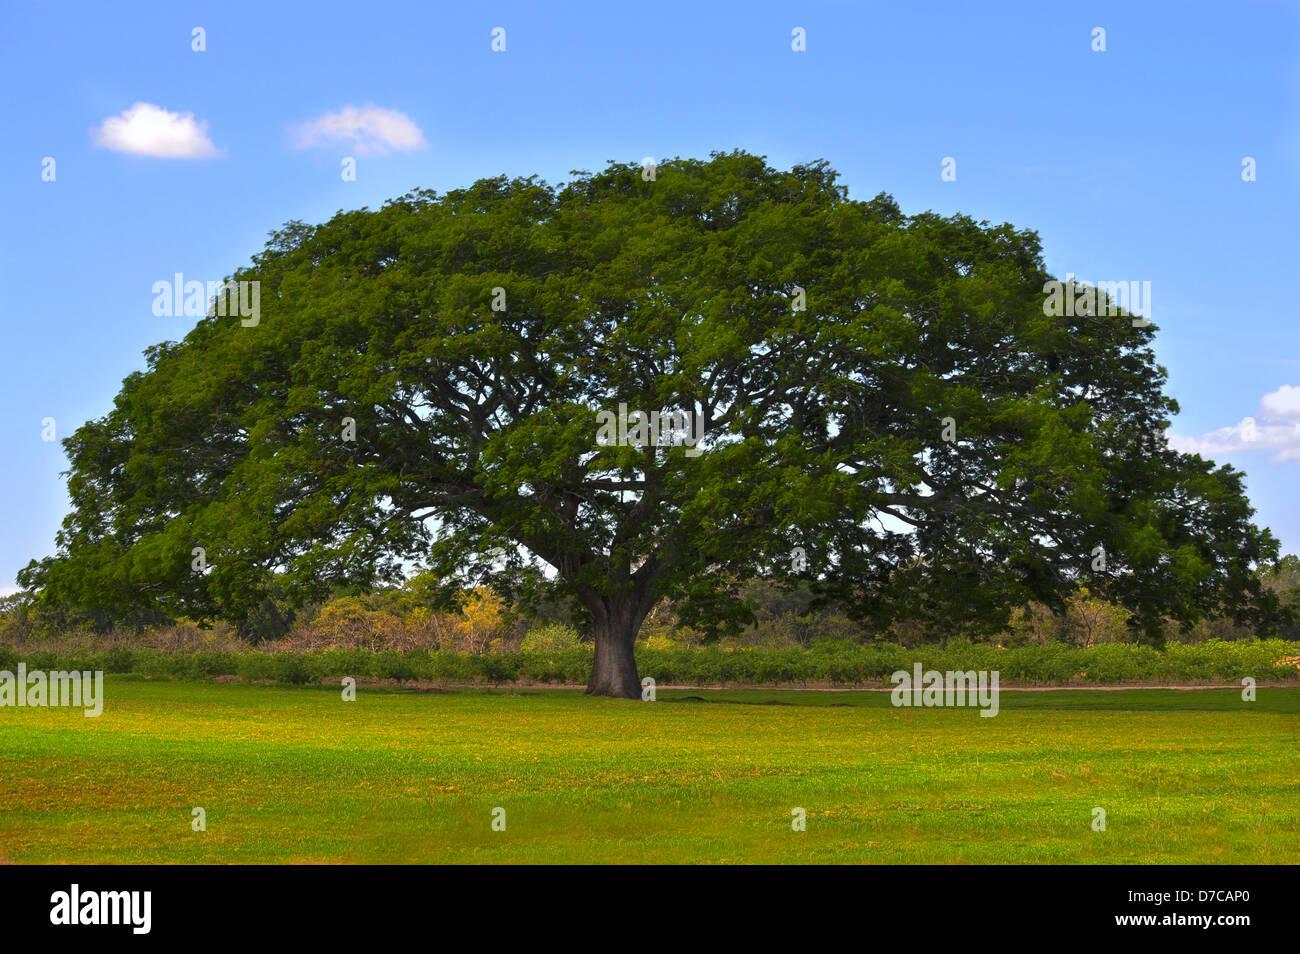 Grand arbre au milieu d'un champ vert avec un ciel bleu Banque D'Images